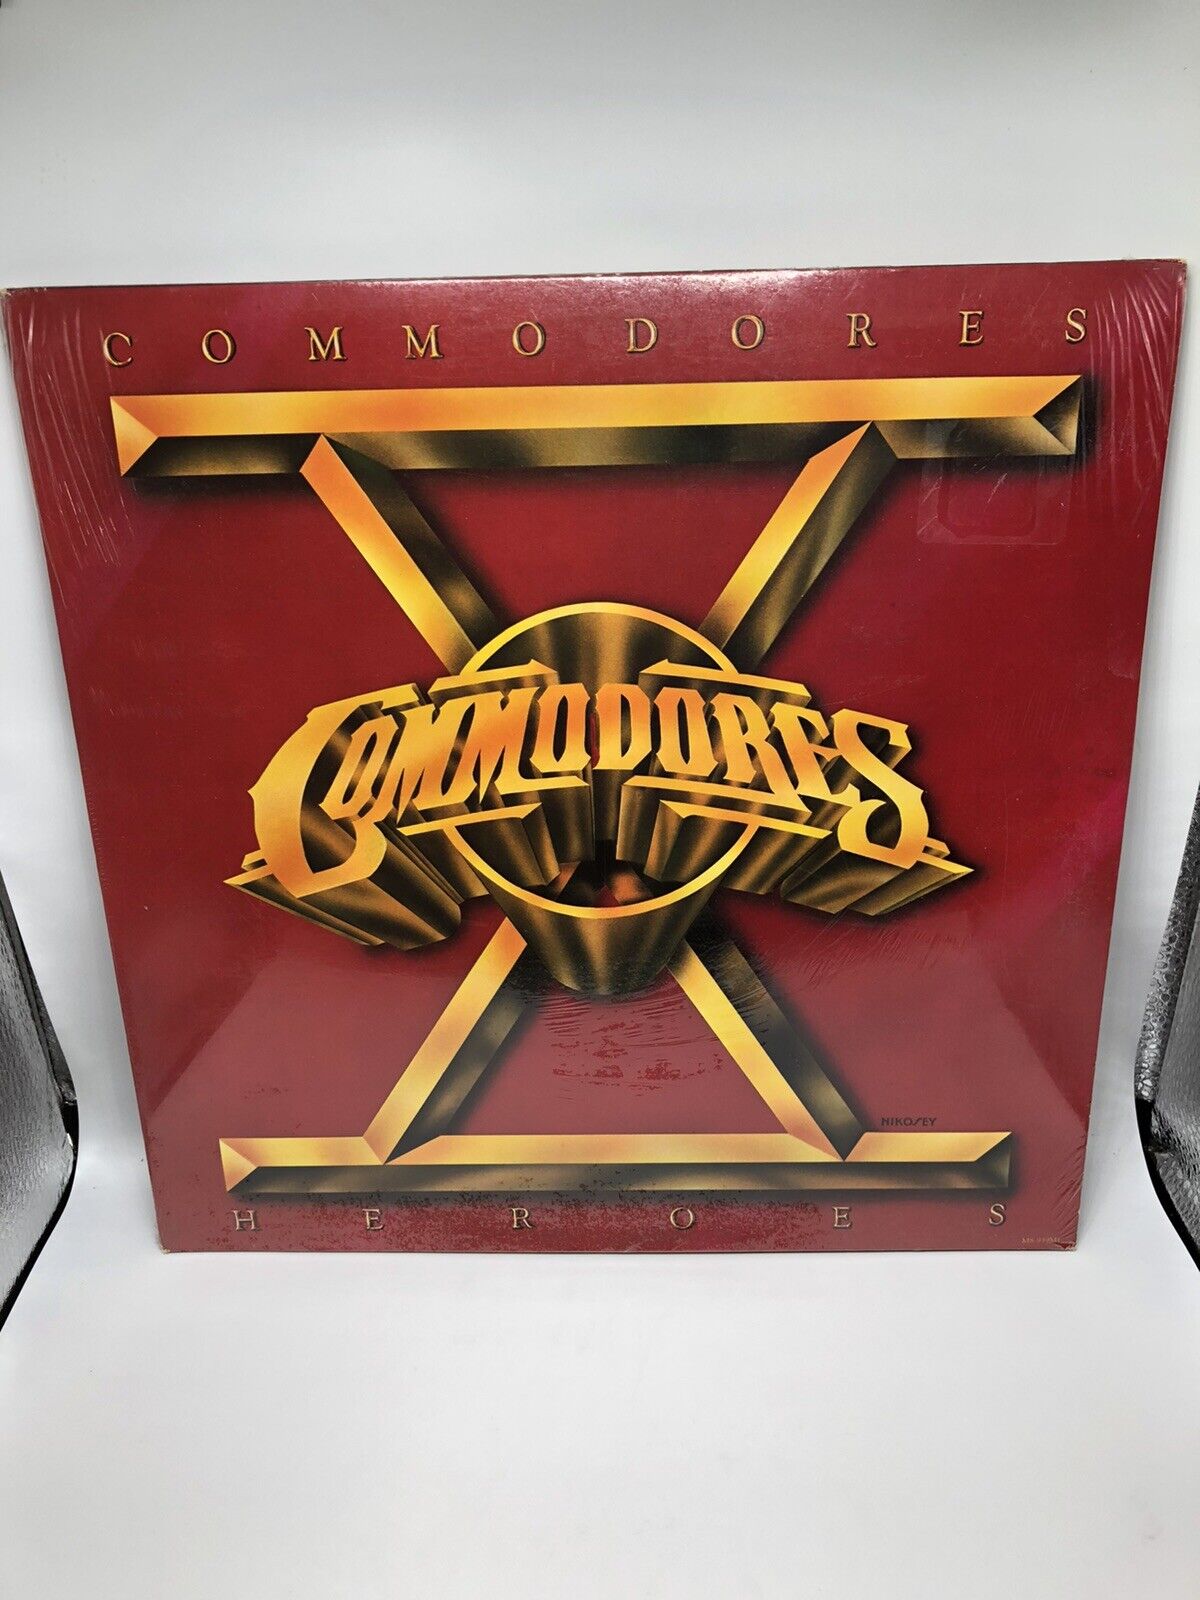 NEW! Commodores "Heroes" (p)(c)1980 Vinyl LP Record SEALED NEW!